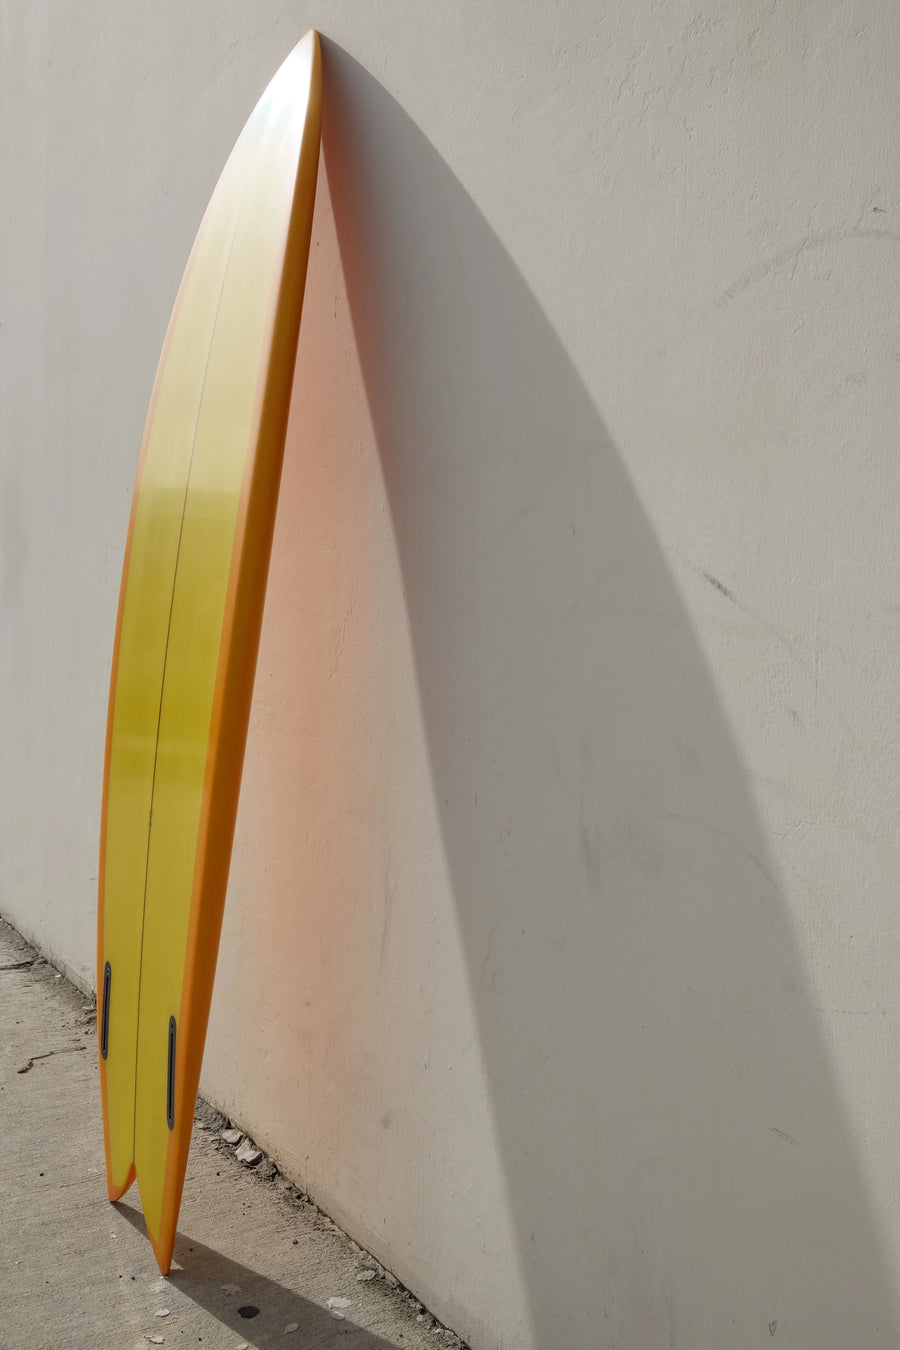 Love Machine | 5'9" Wills Fish I Orange/Yellow Surfboard - Surf Bored